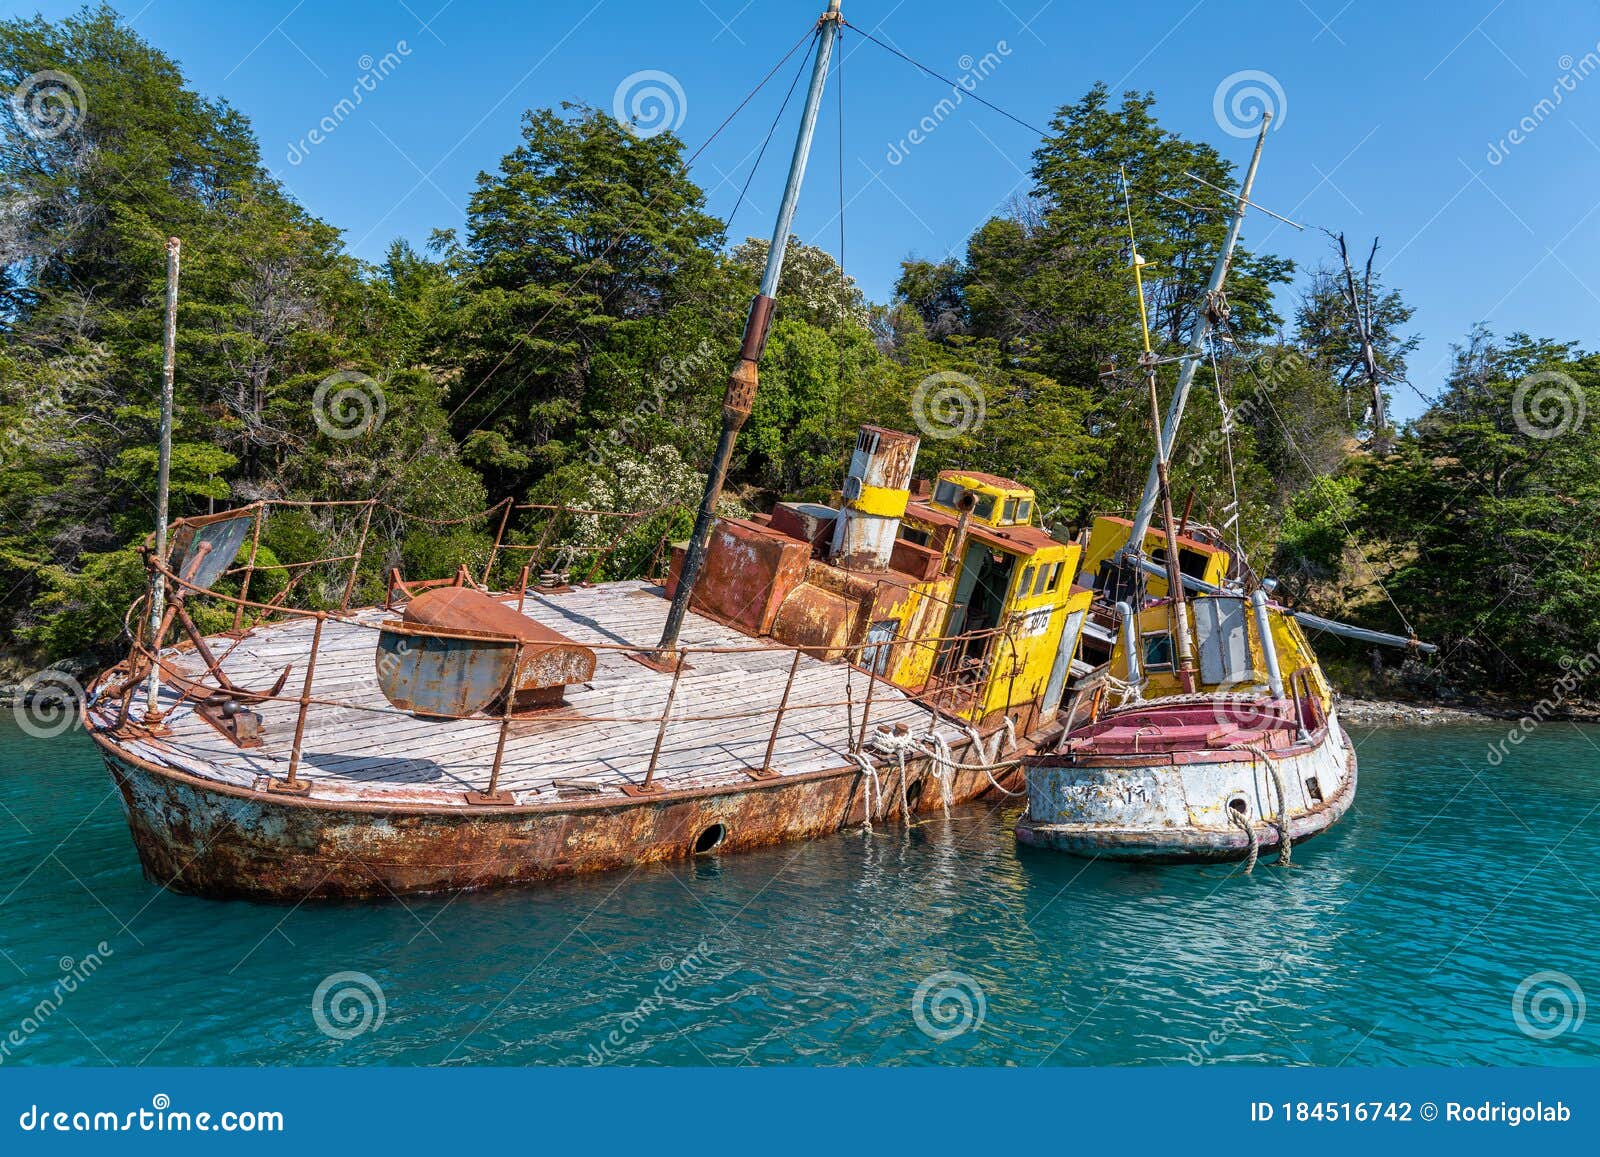 shipwreck in the general carrera lake in chile, patagonia, south america